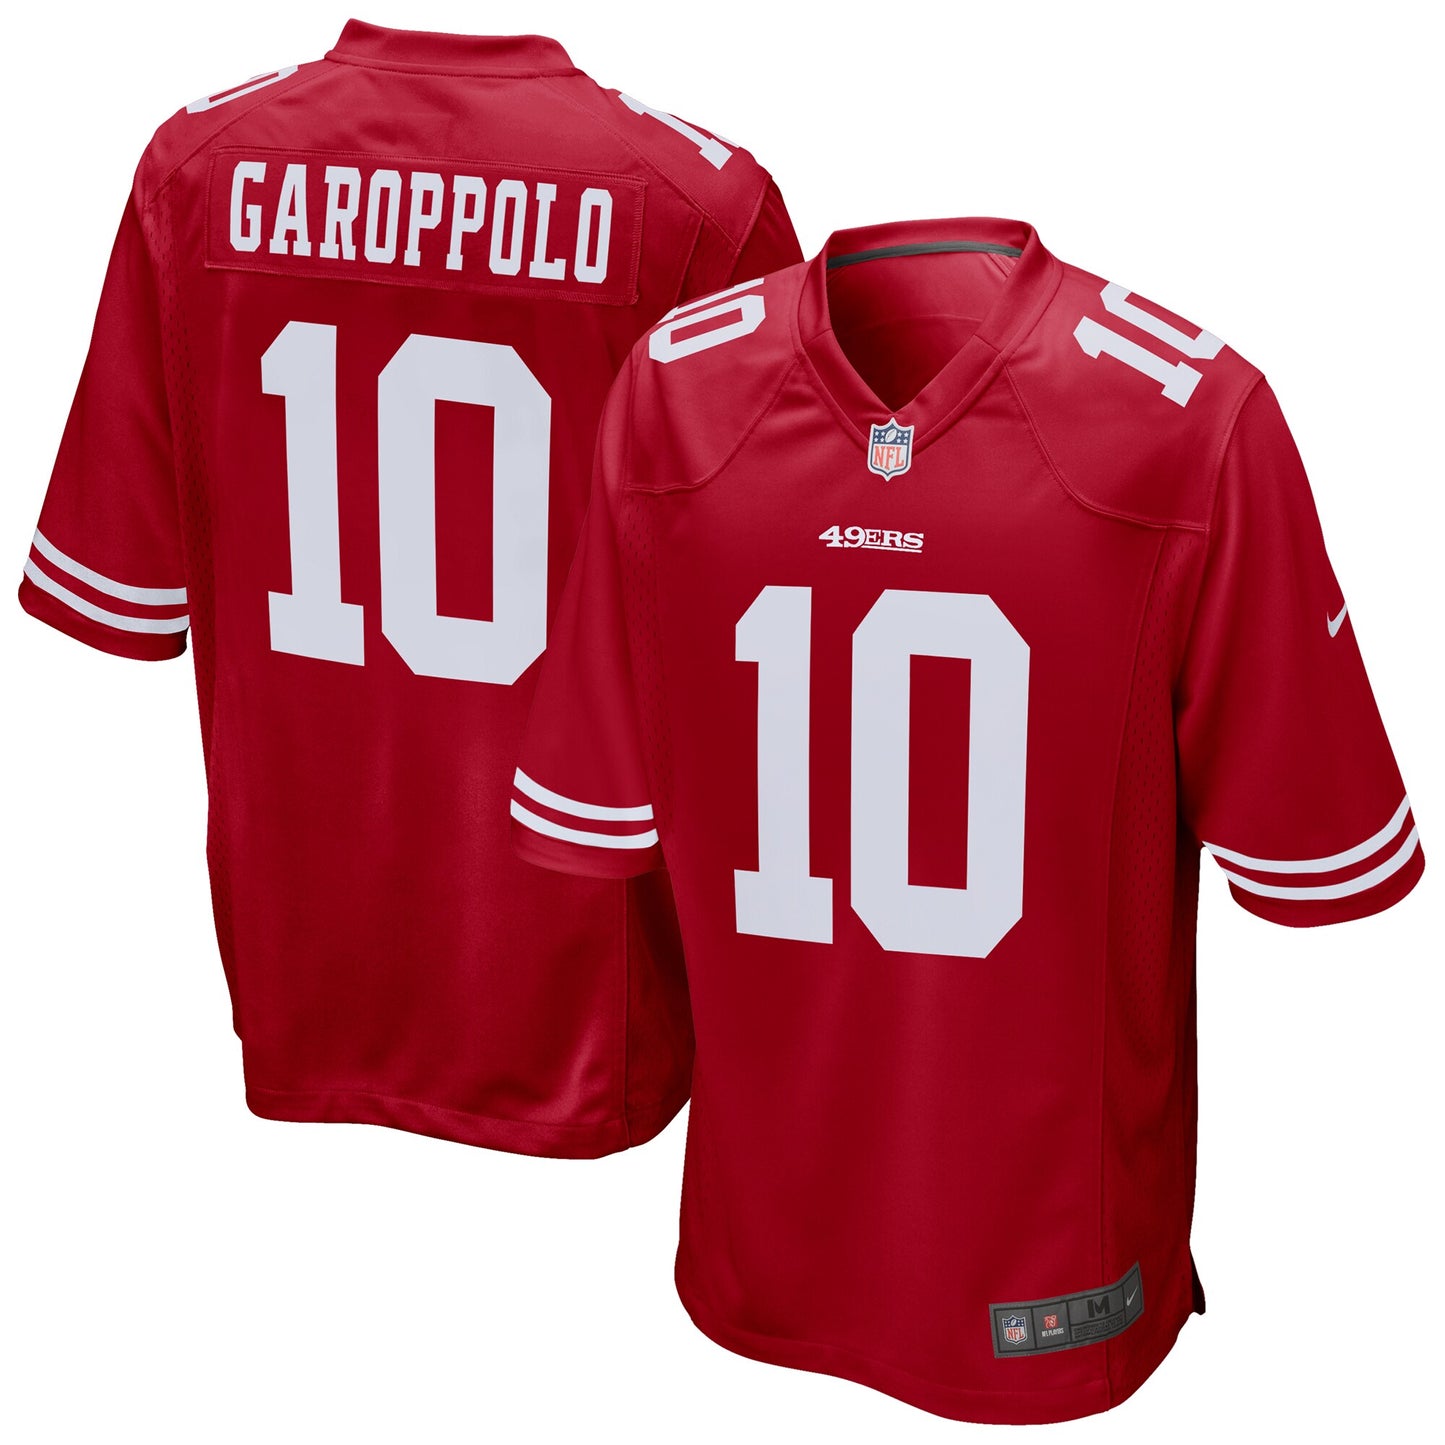 Jimmy Garoppolo San Francisco 49ers Nike Game Jersey - Scarlet